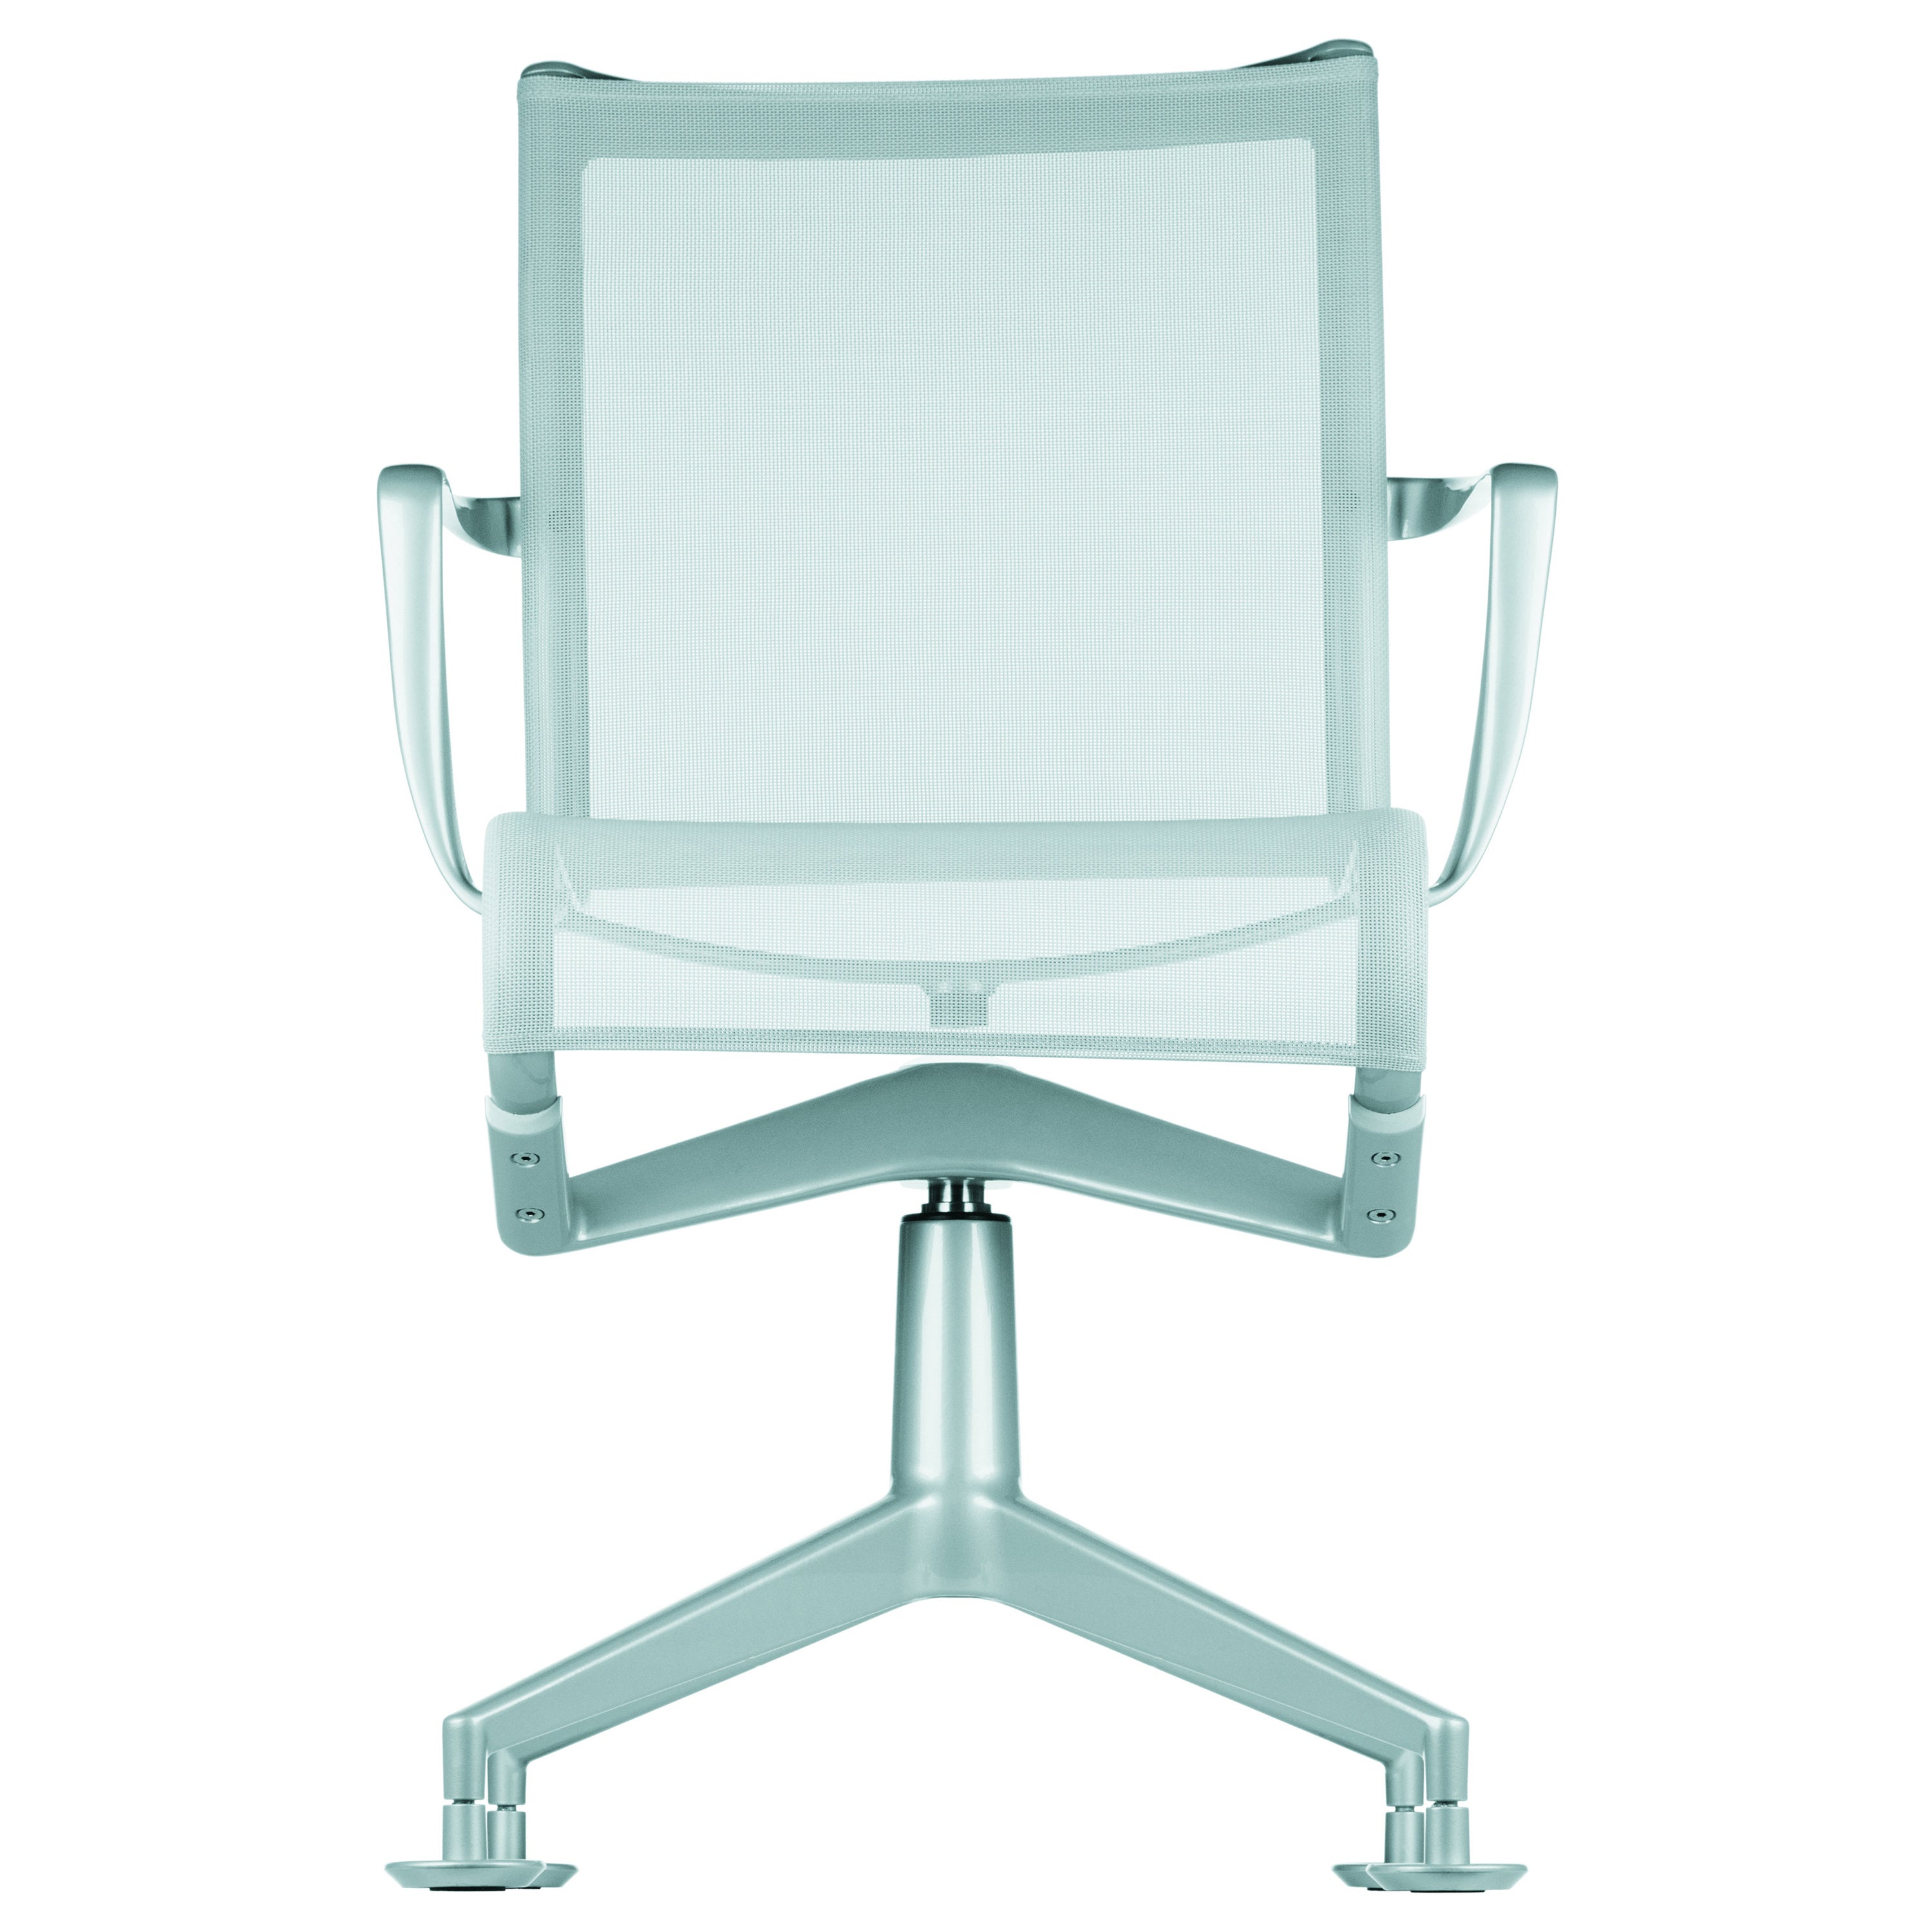 437 Meetingframe 44 Stuhl aus weißem Mesh mit lackiertem Aluminiumrahmen im Angebot